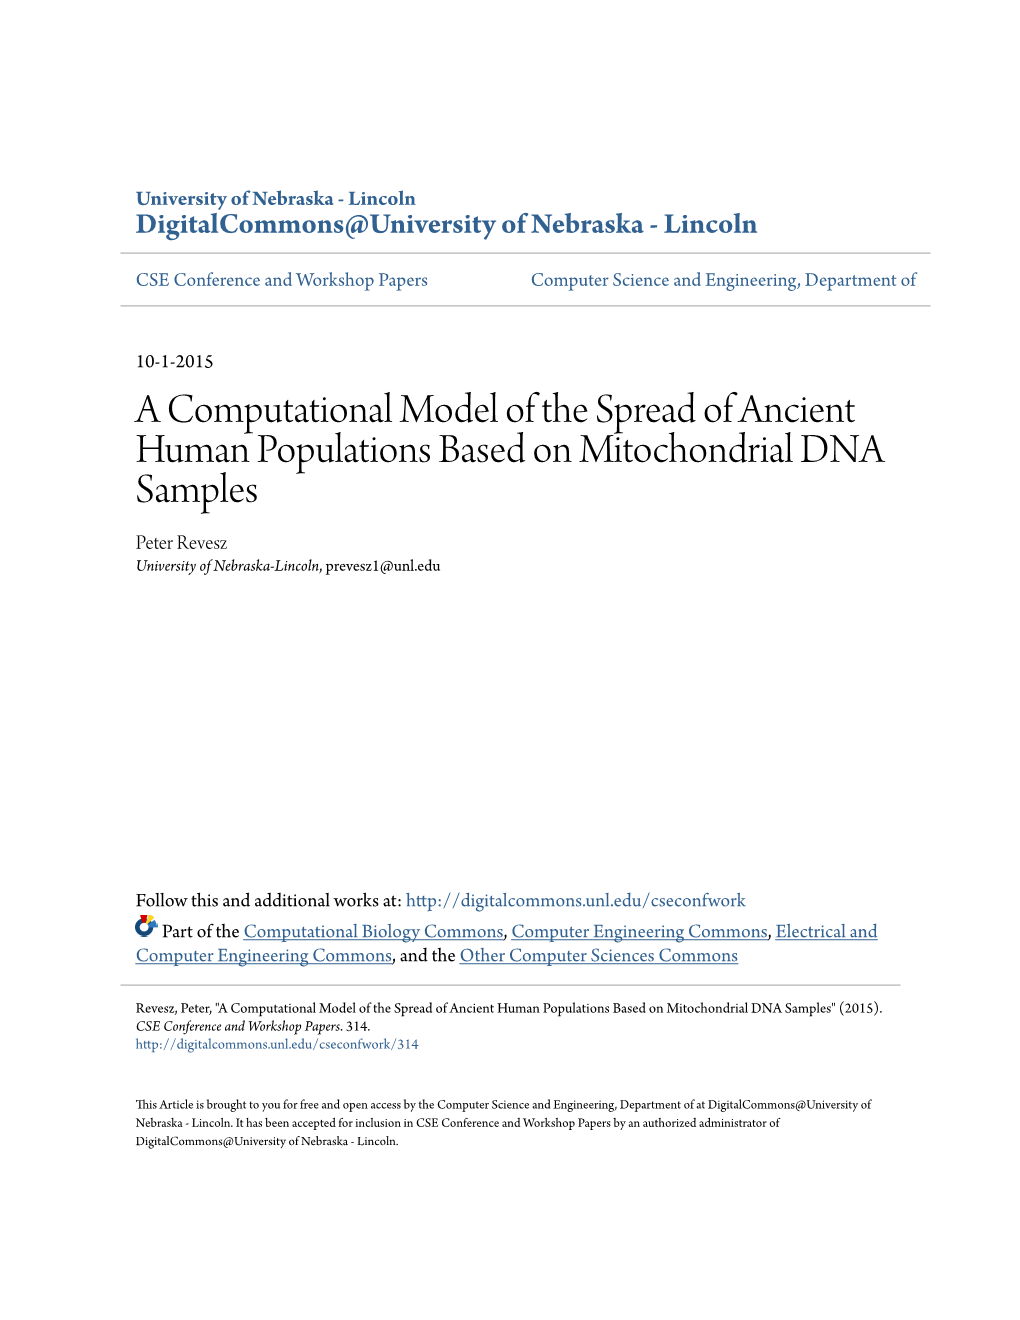 A Computational Model of the Spread of Ancient Human Populations Based on Mitochondrial DNA Samples Peter Revesz University of Nebraska-Lincoln, Prevesz1@Unl.Edu